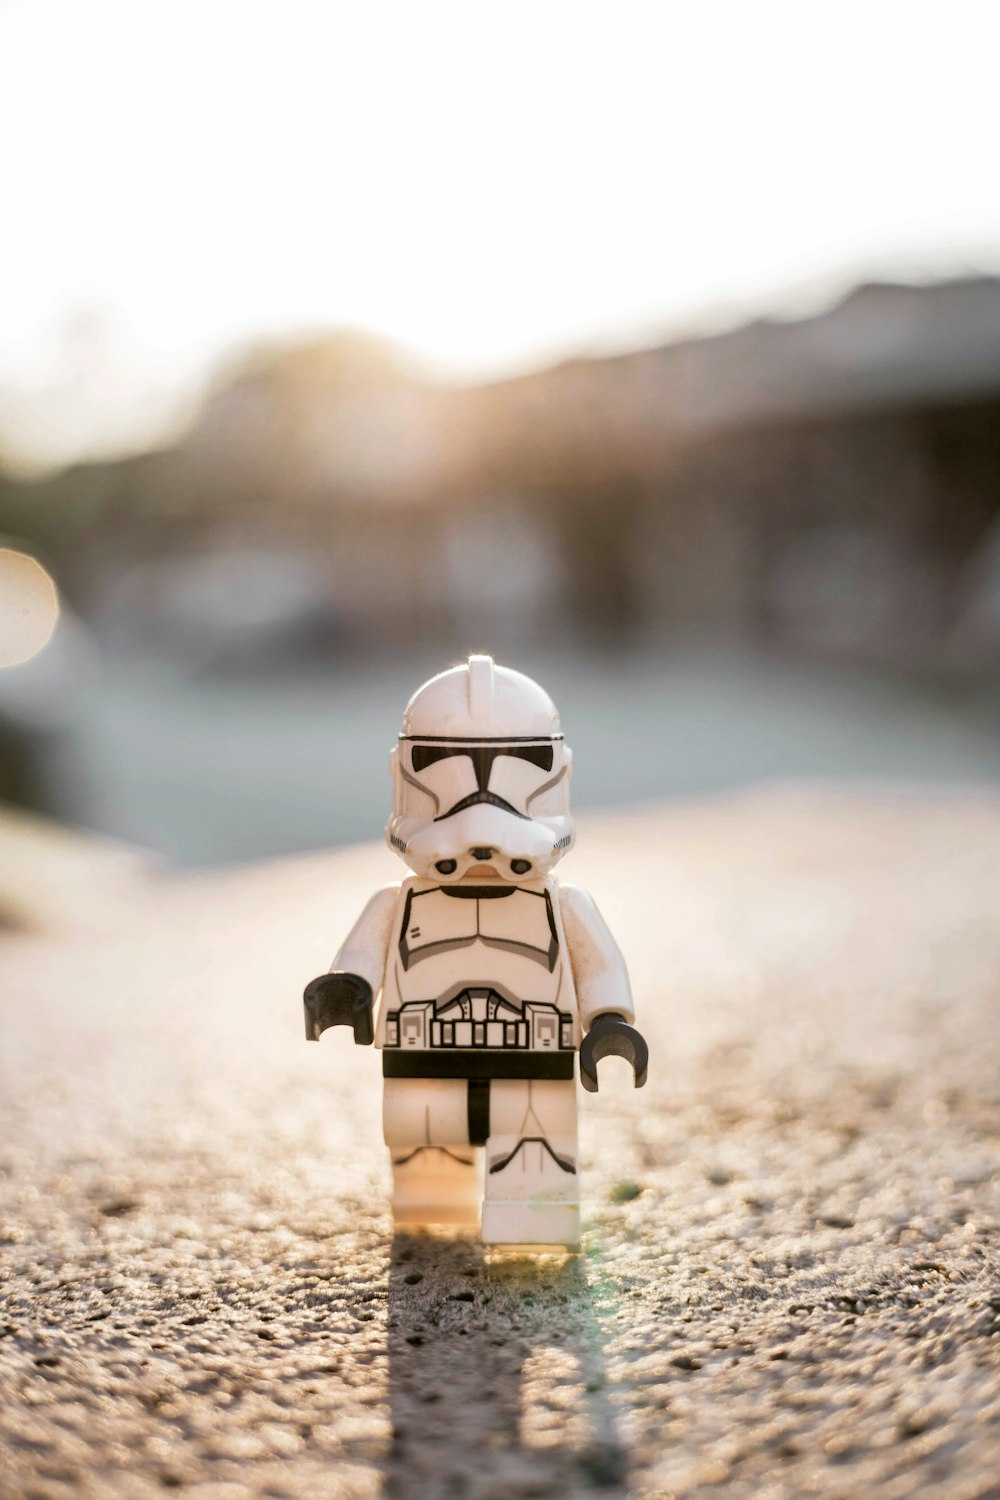 Lego Star Wars Pictures | Download Free Images on Unsplash